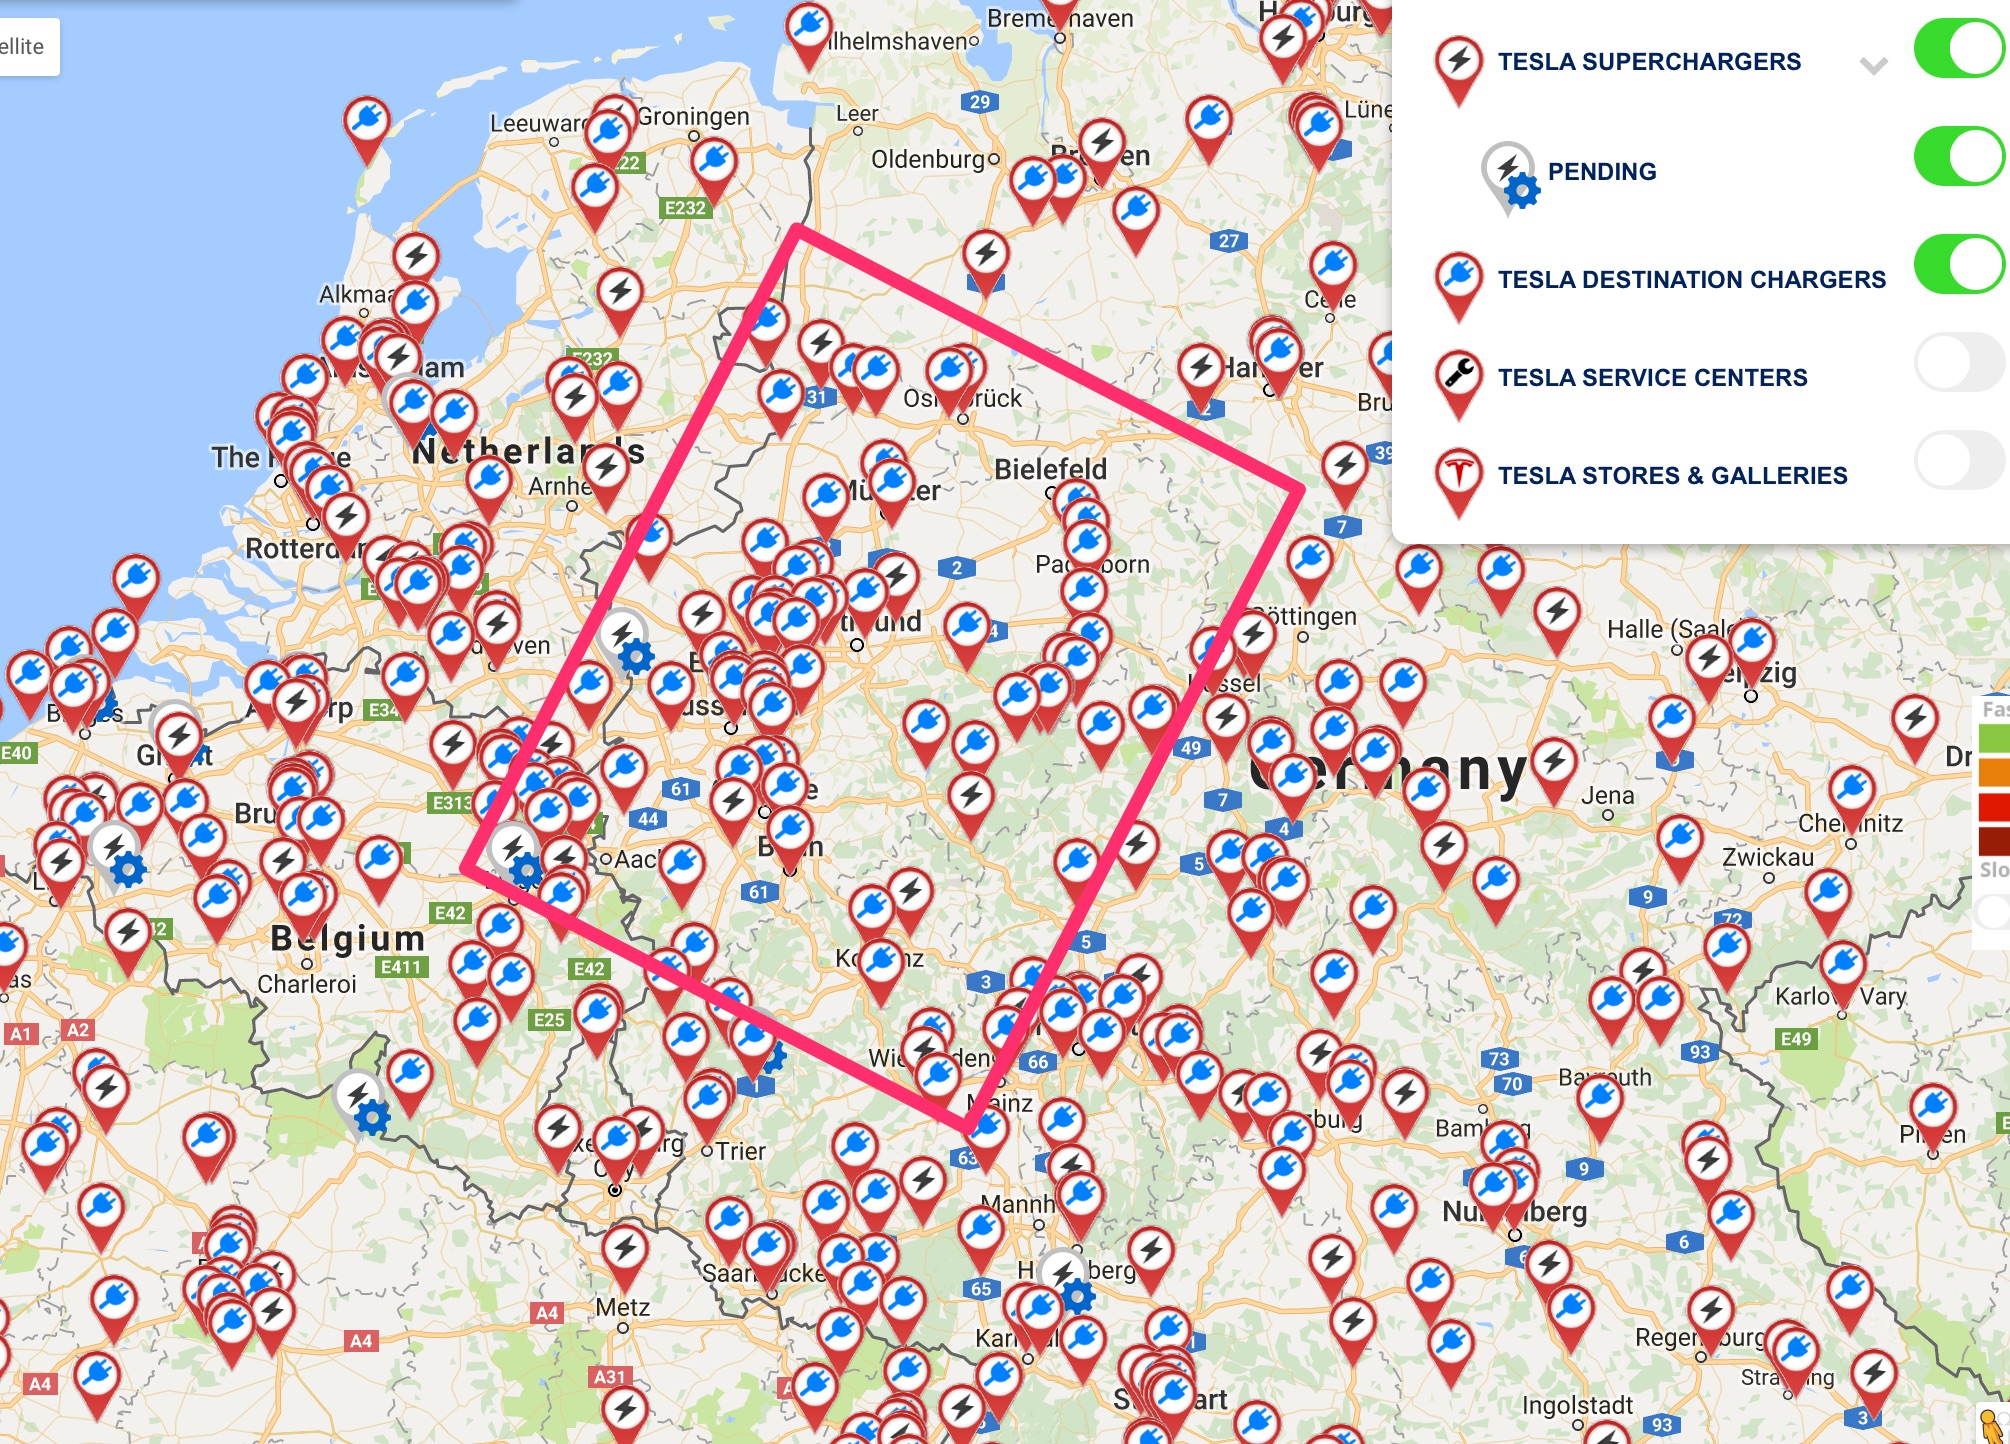 tesla-destination-chargers-europe-map-rheine-germany